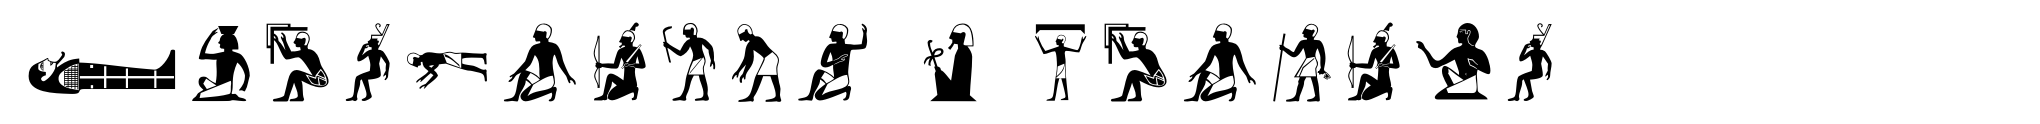 Hieroglyph A Regular image